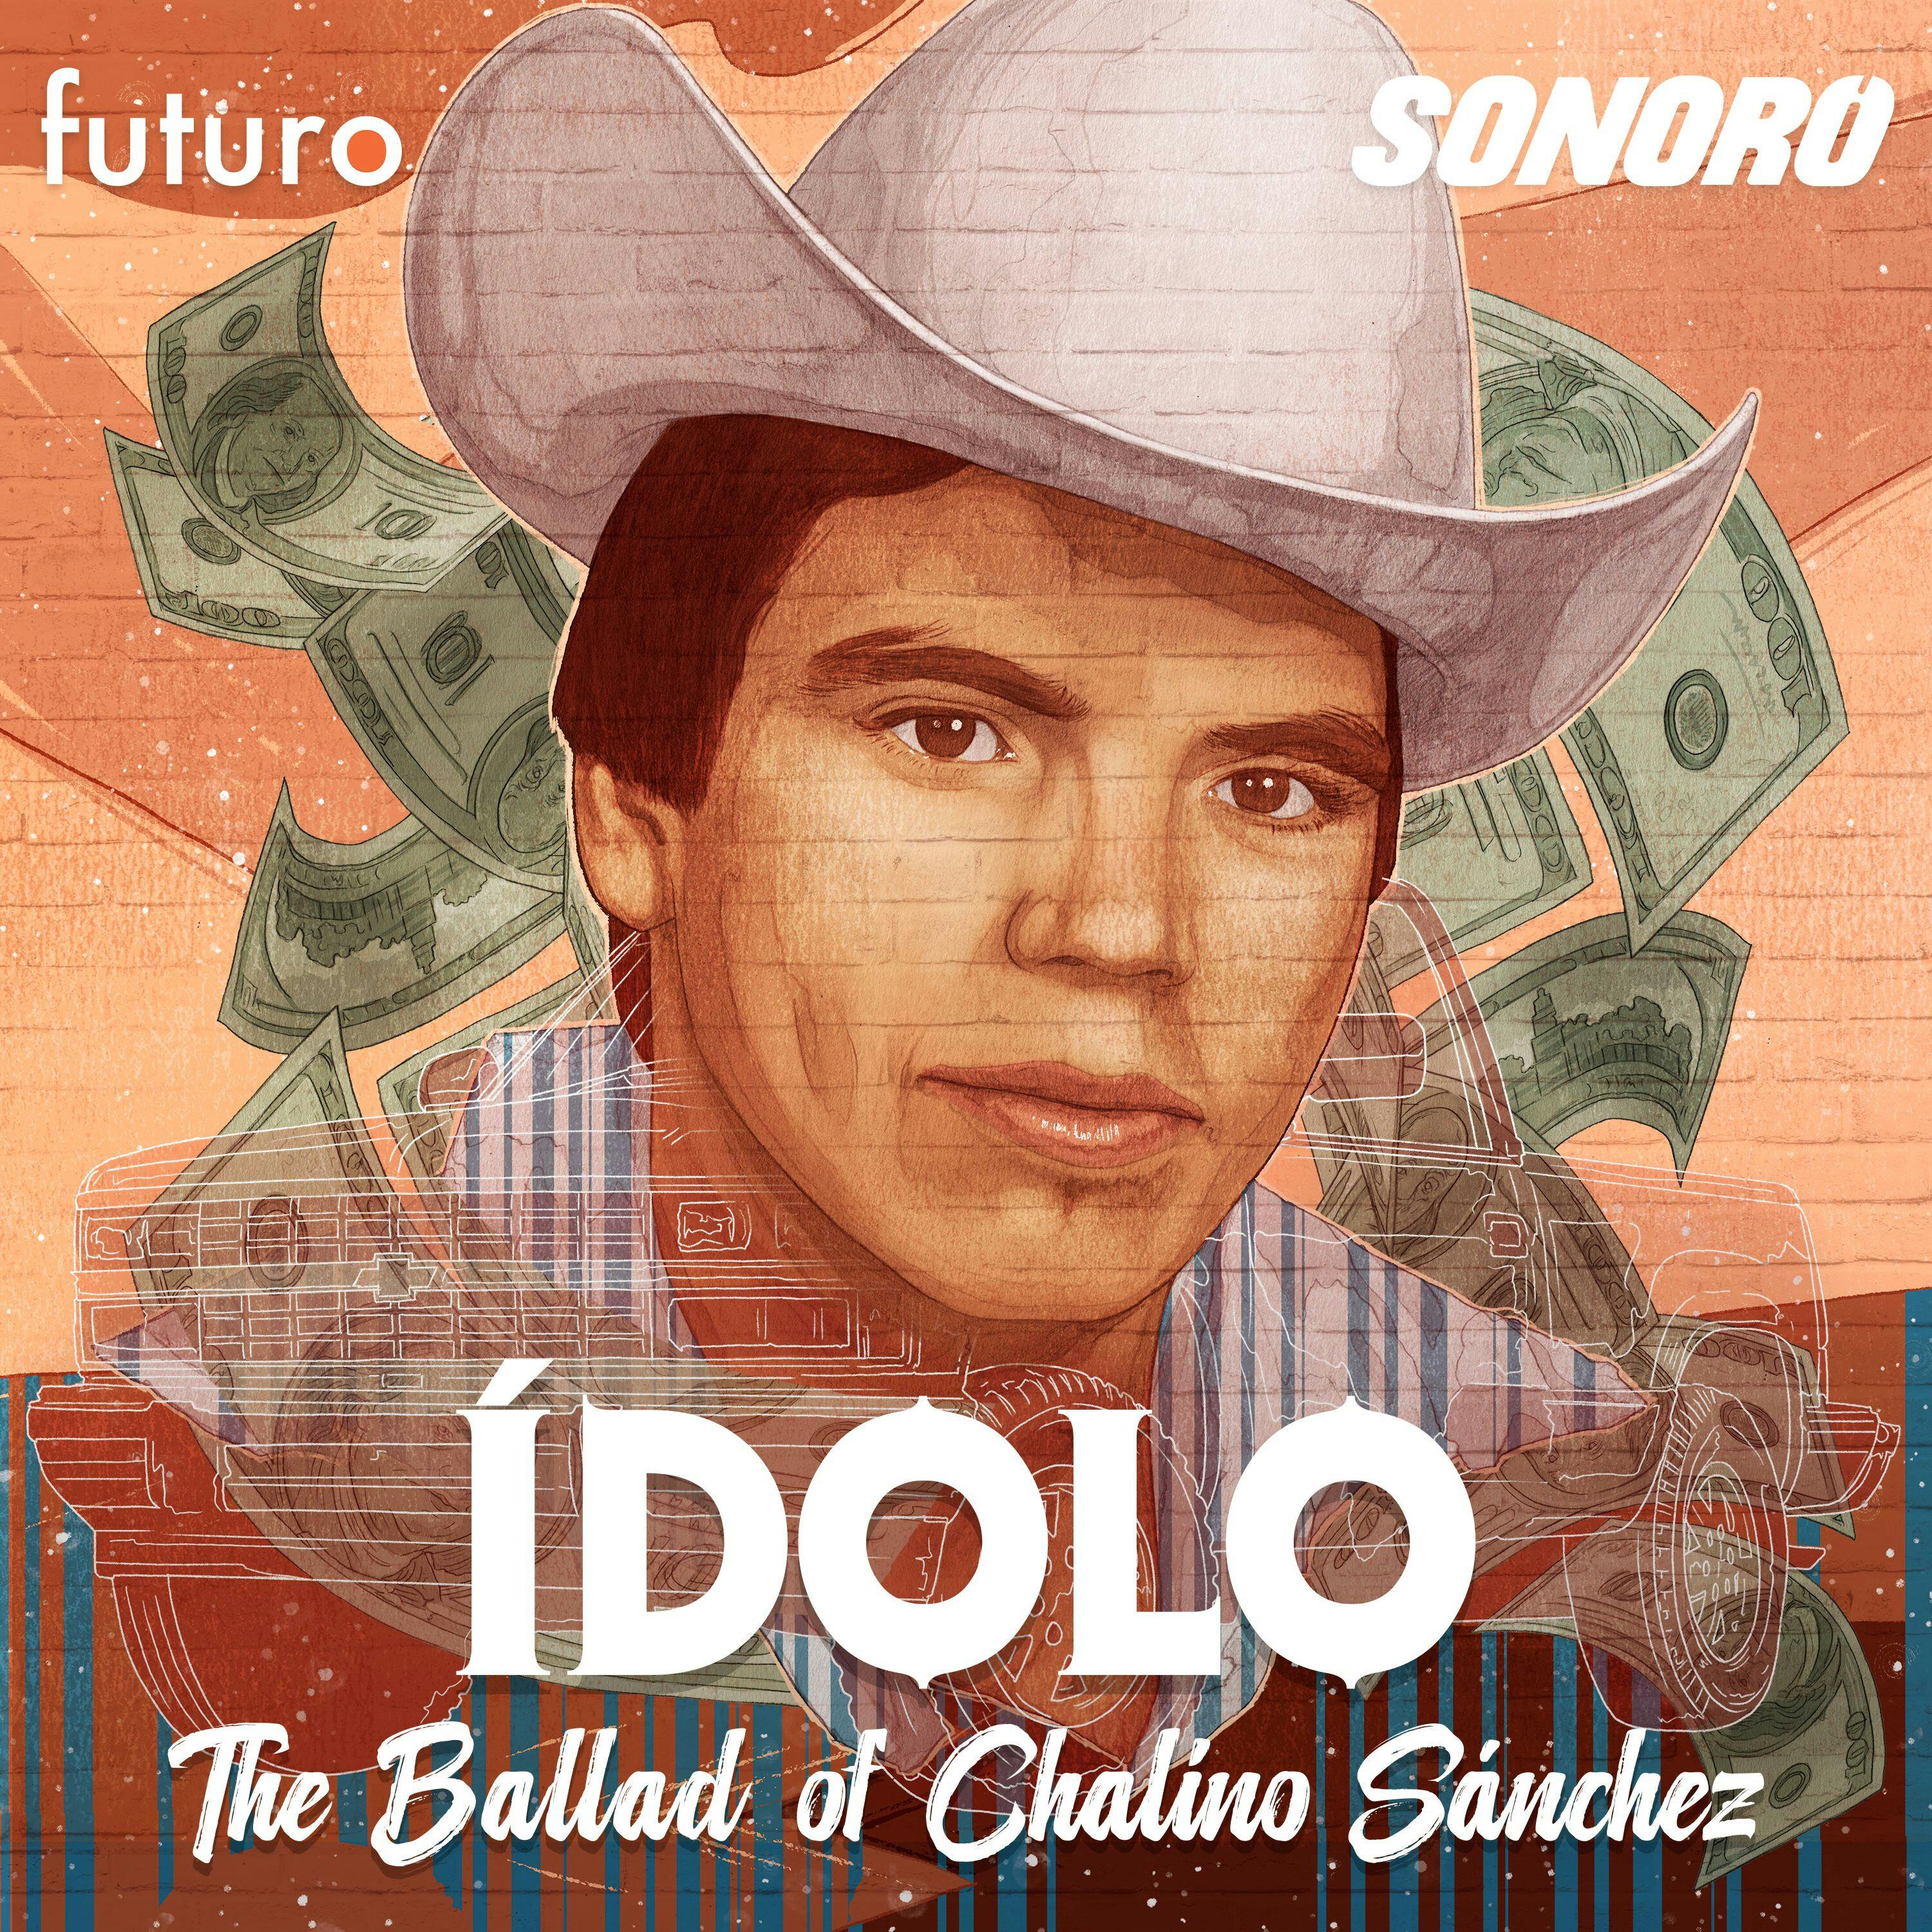 Ídolo: The Ballad of Chalino Sánchez podcast show image